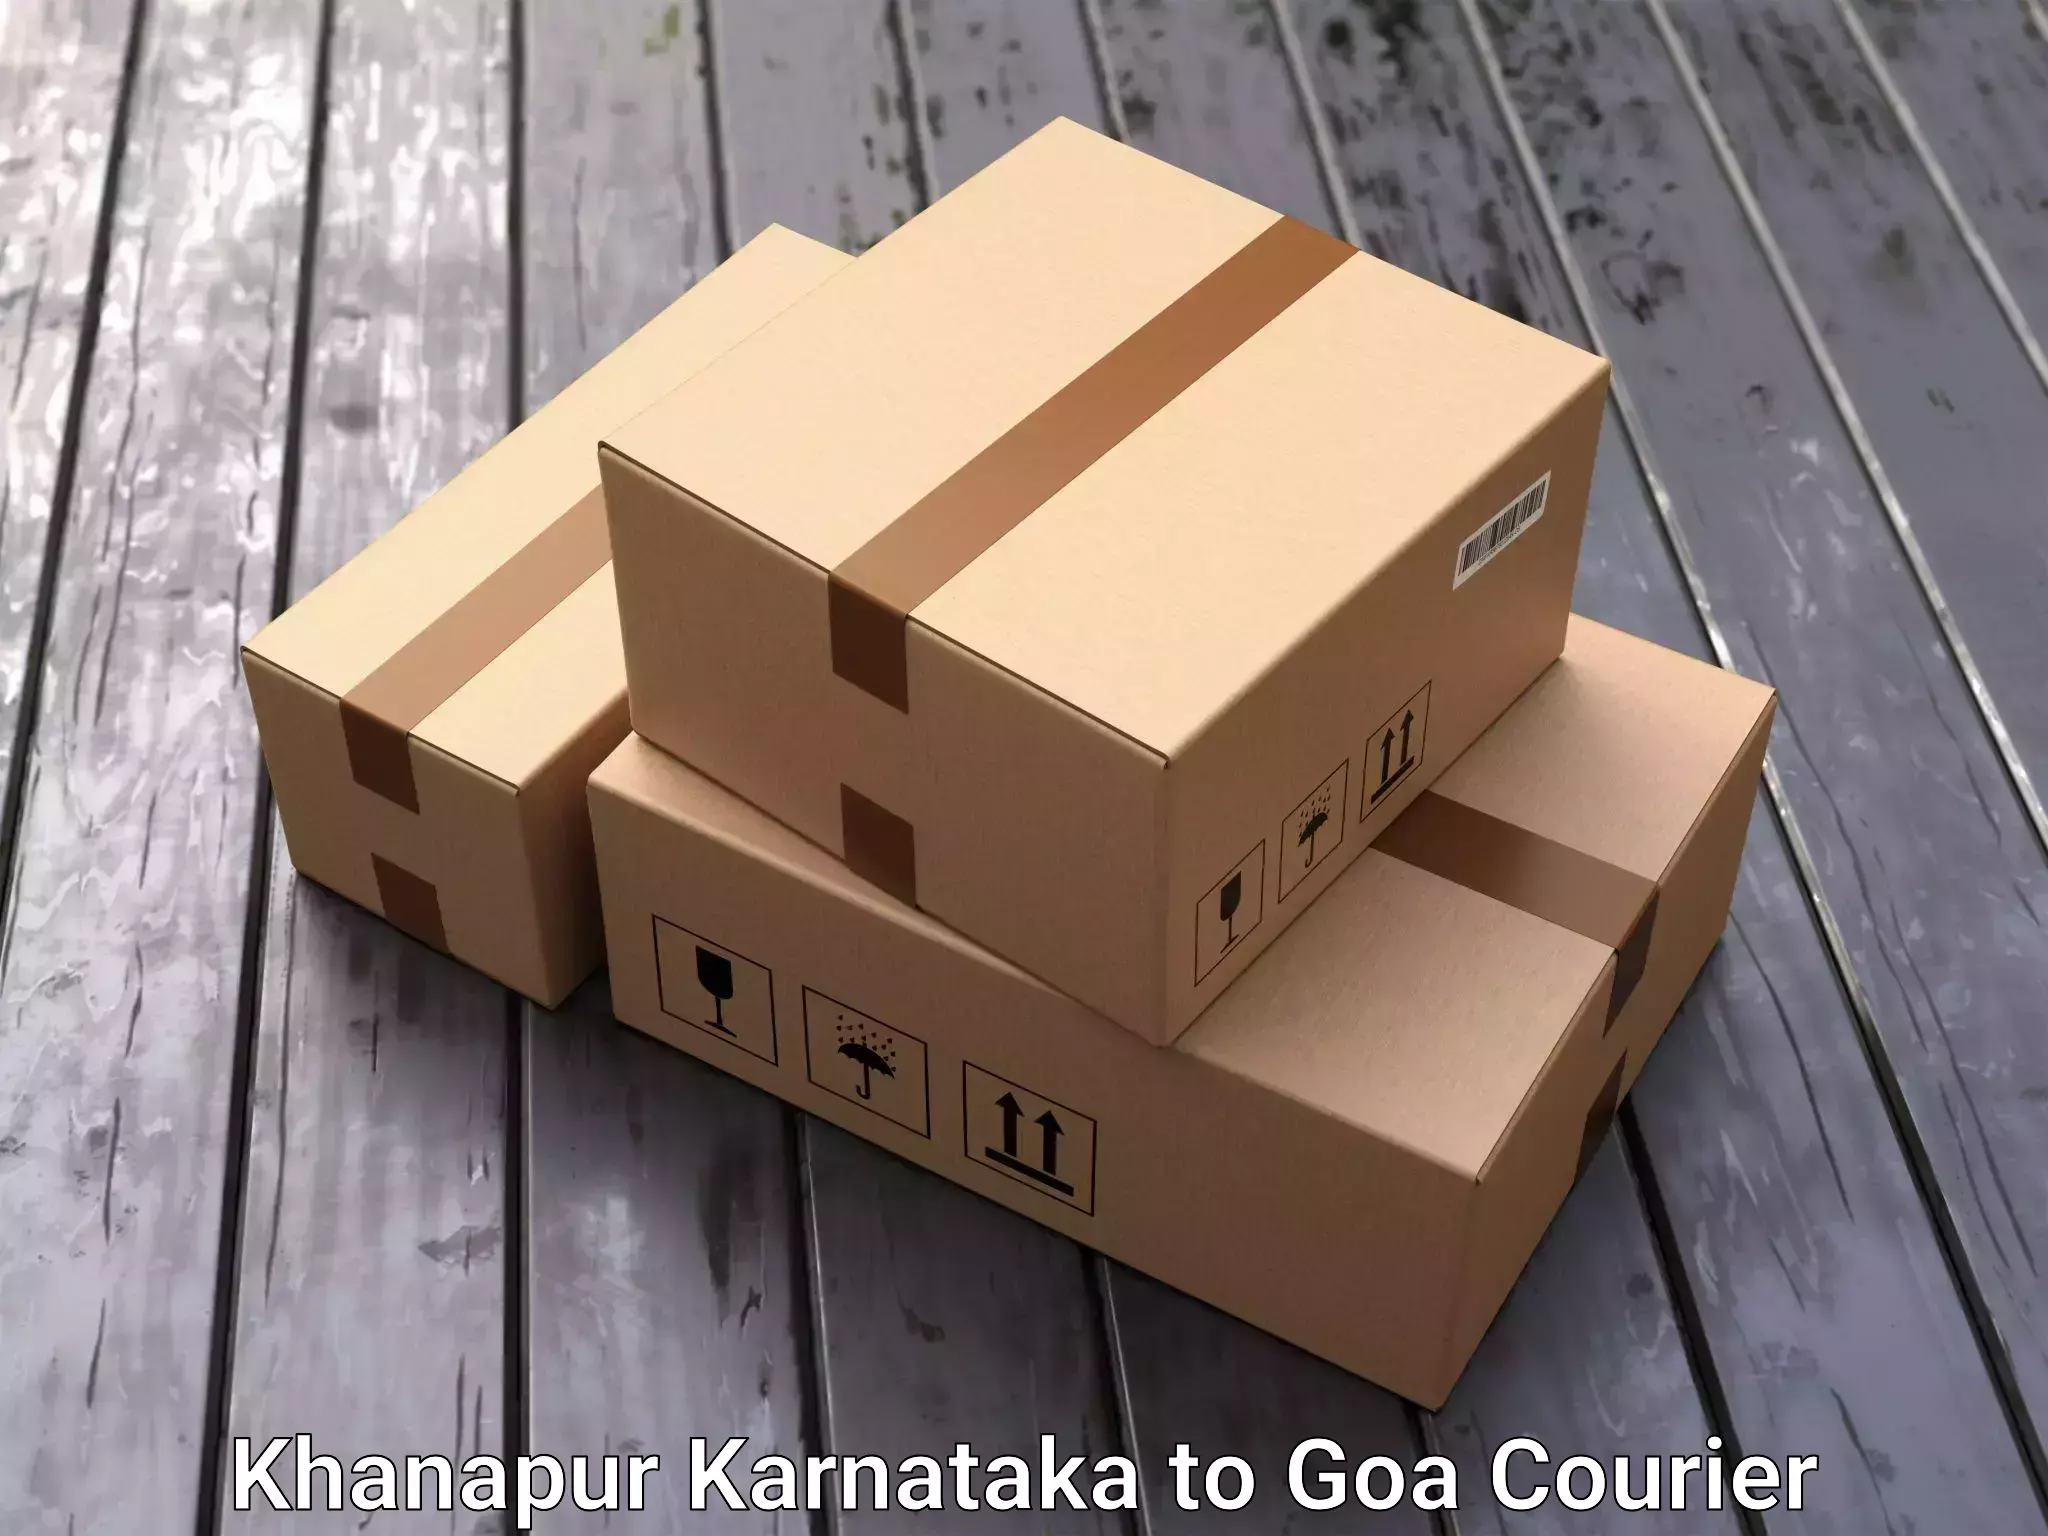 Professional moving assistance Khanapur Karnataka to South Goa